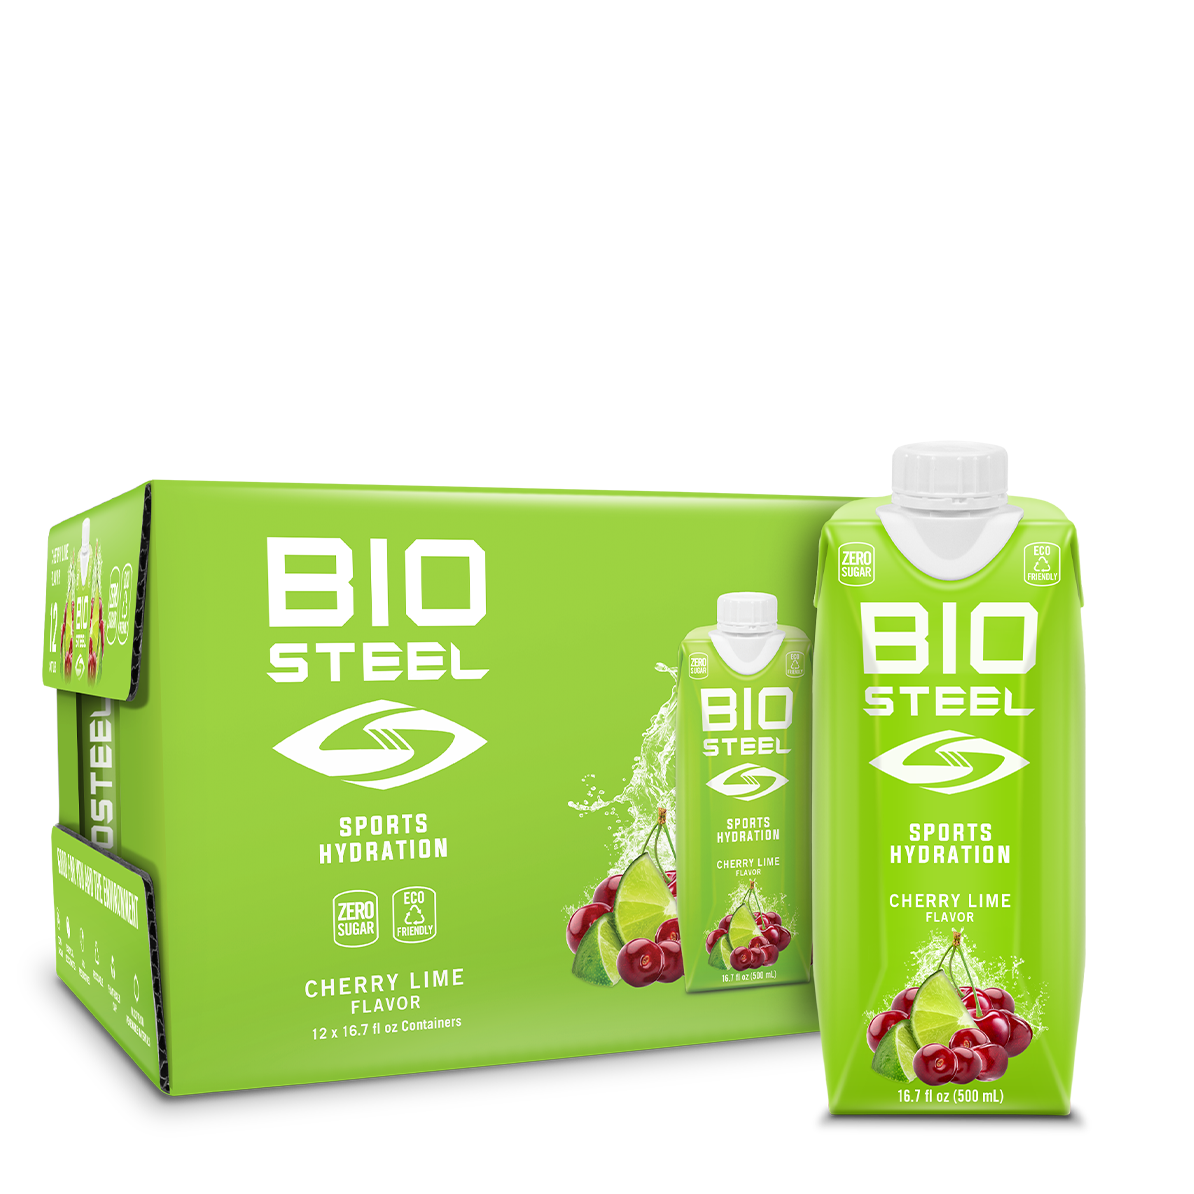 Biosteel Sports Drink, Sugar Free, Blue Raspberry Flavor - 16.7 fl oz